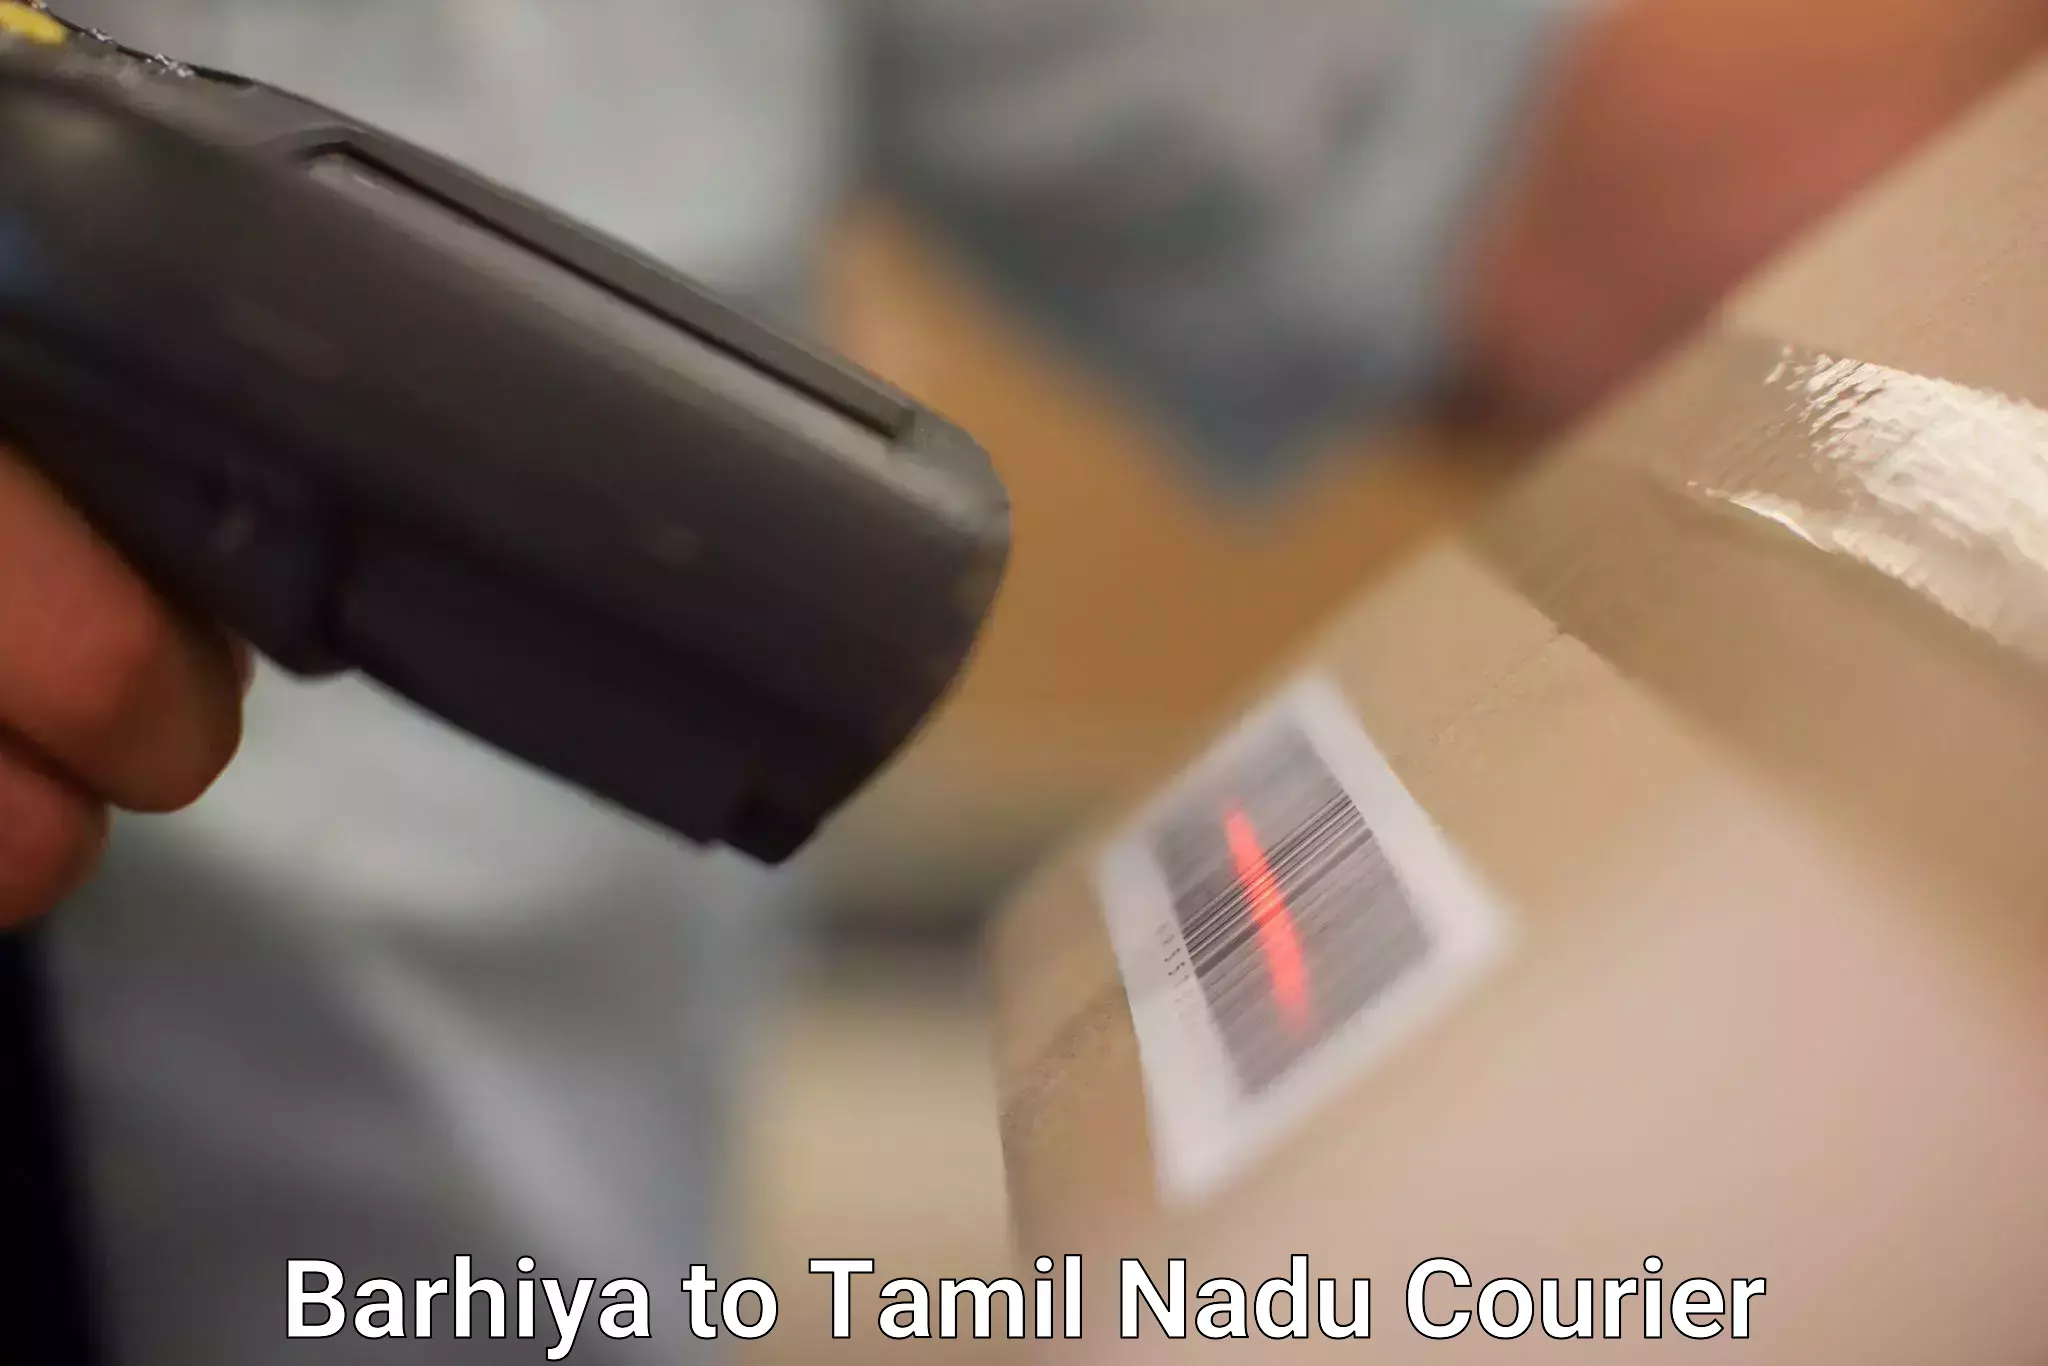 Global shipping networks Barhiya to Tamil Nadu